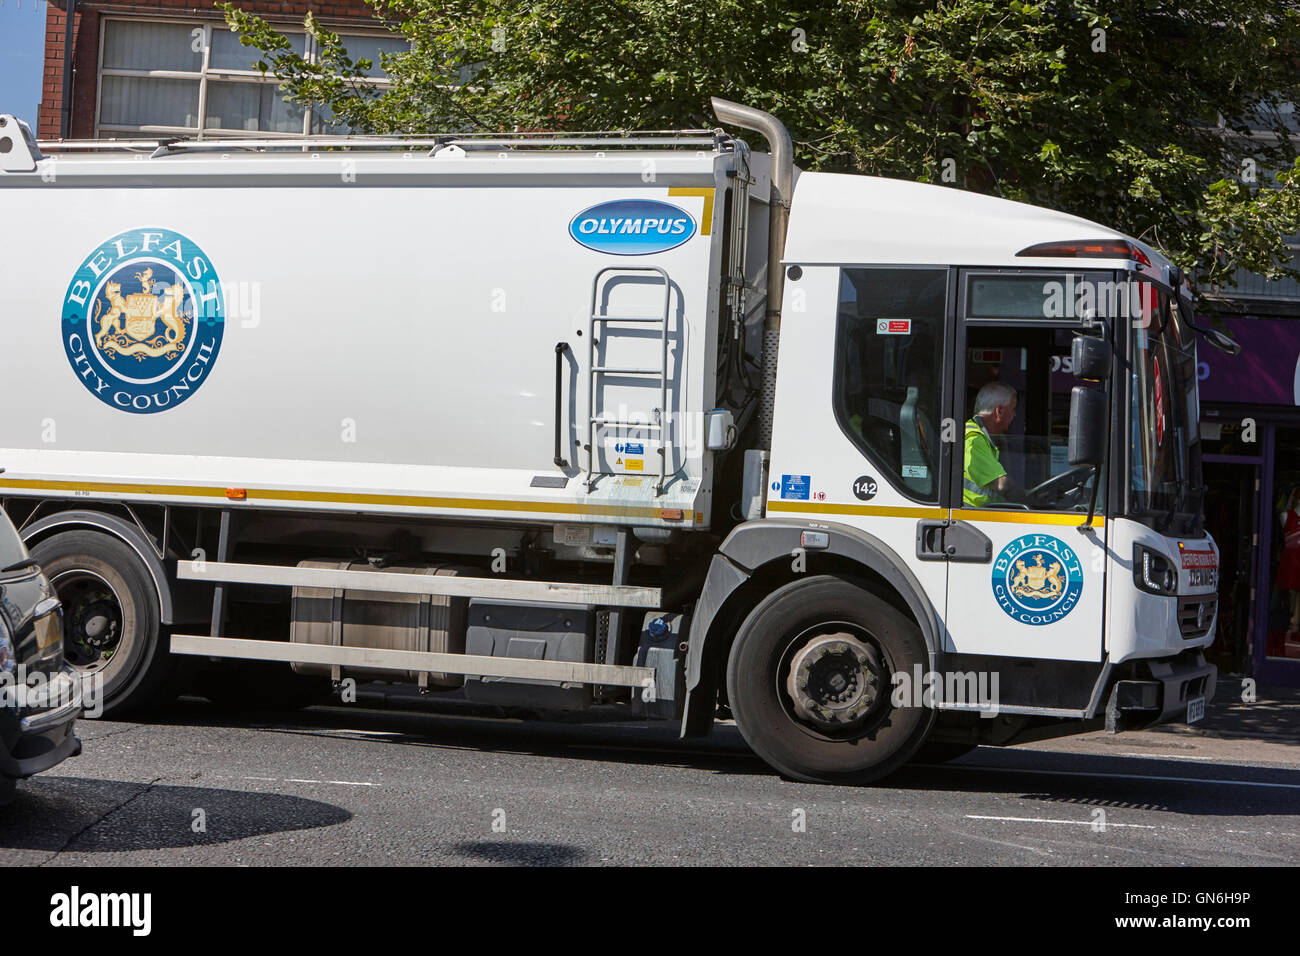 Belfast City council camion dennis olympus Banque D'Images